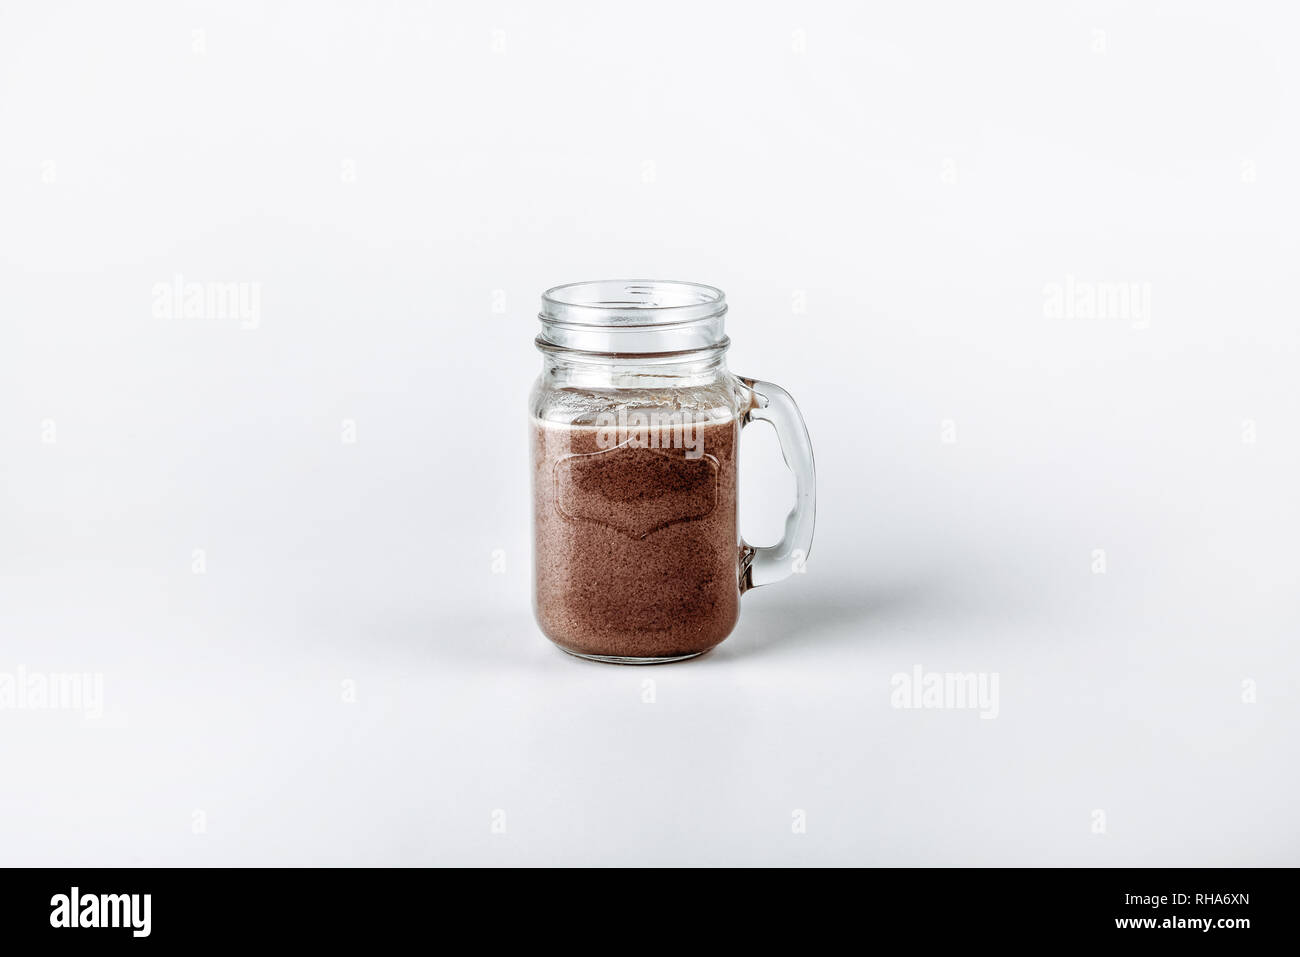 https://c8.alamy.com/comp/RHA6XN/fresh-protein-shake-milk-with-cocoa-in-a-glass-jar-on-a-white-background-RHA6XN.jpg